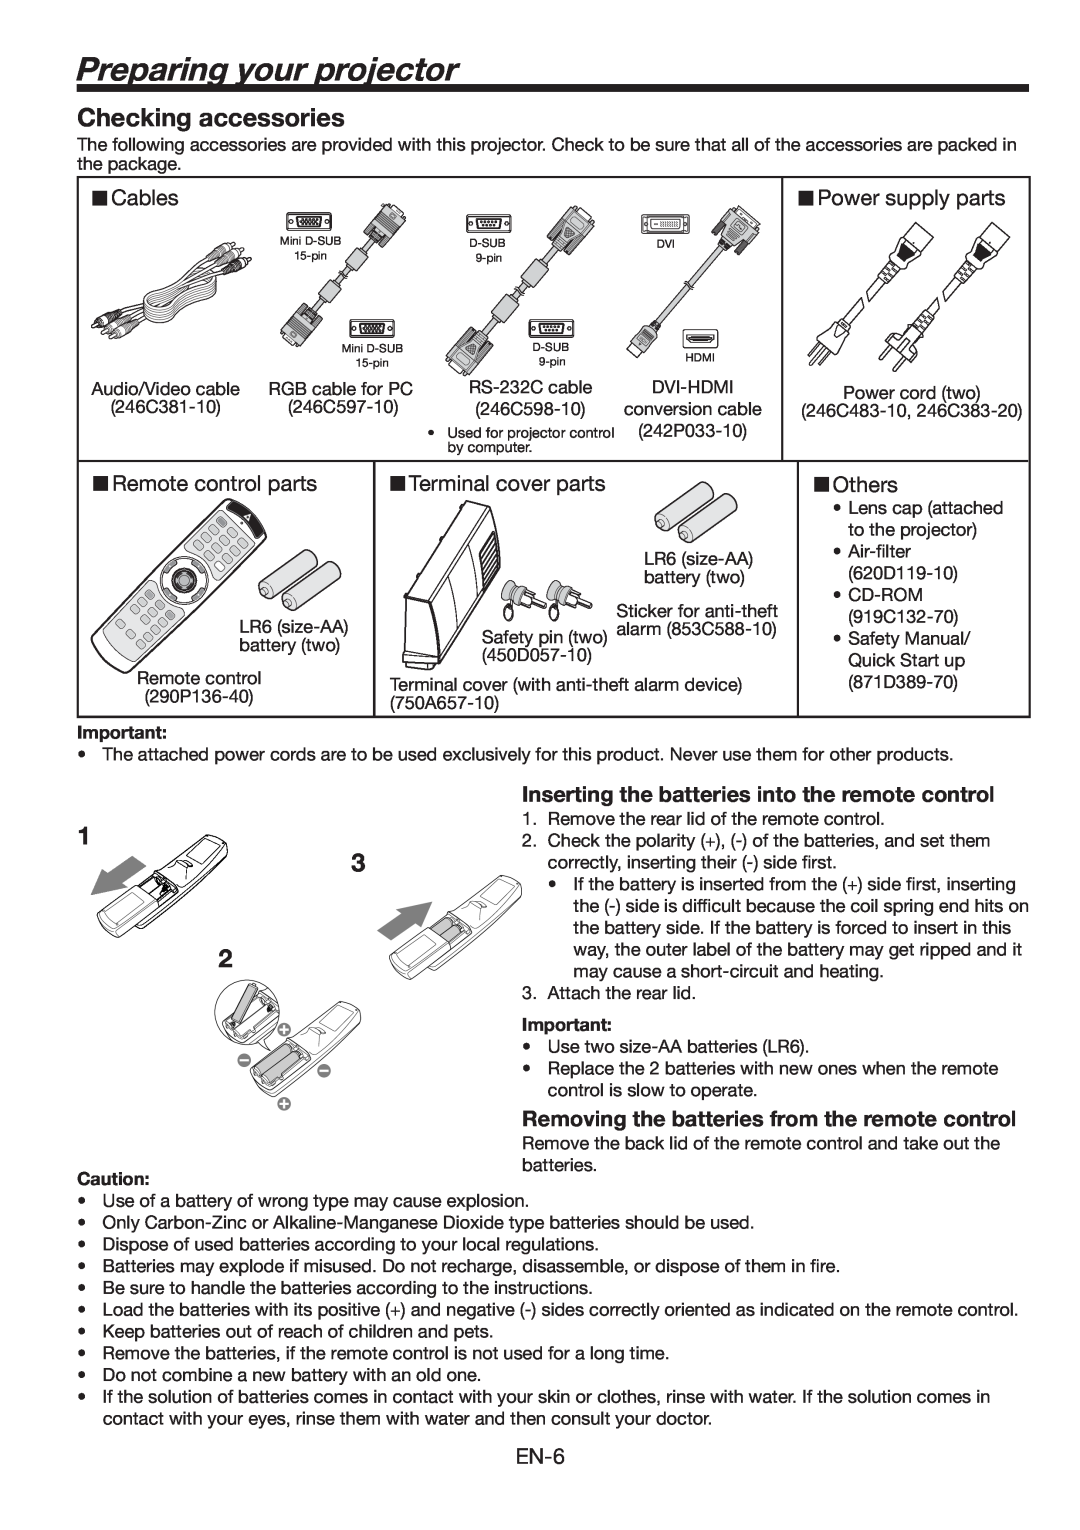 Mitsubishi Electronics FL6900U user manual Preparing your projector, Checking accessories 